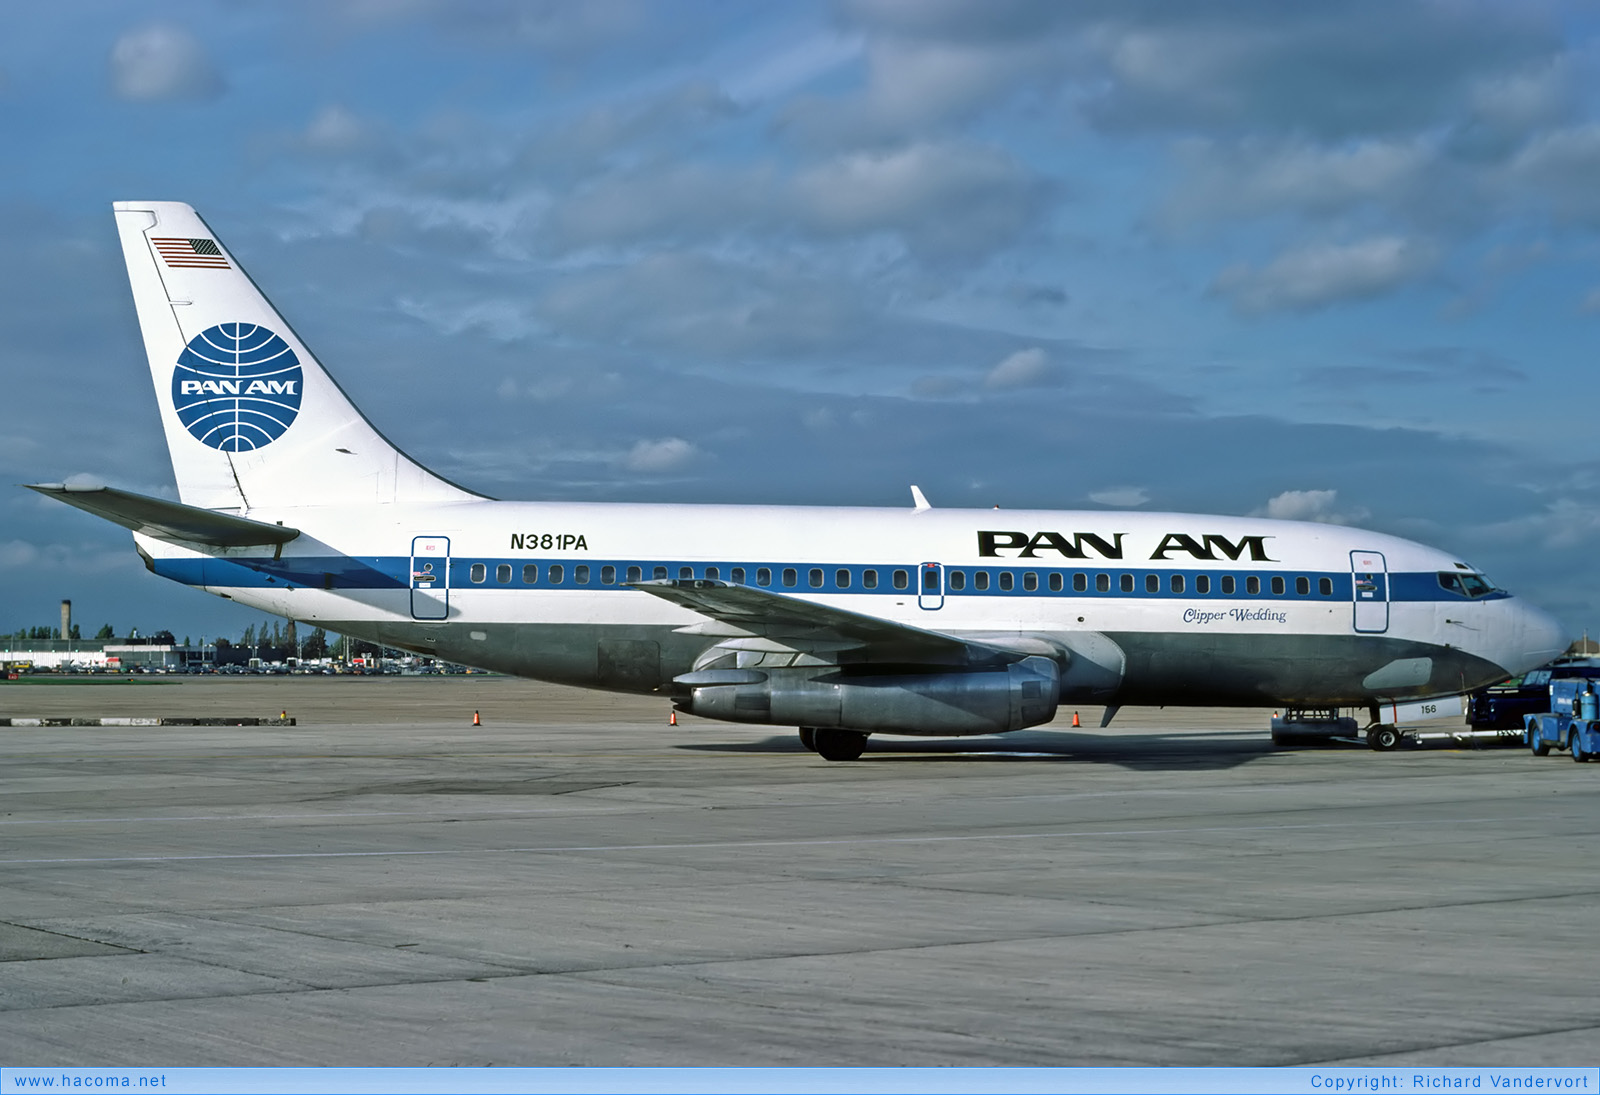 Photo of N381PA - Pan Am Clipper Wedding - London Heathrow Airport - Nov 1982